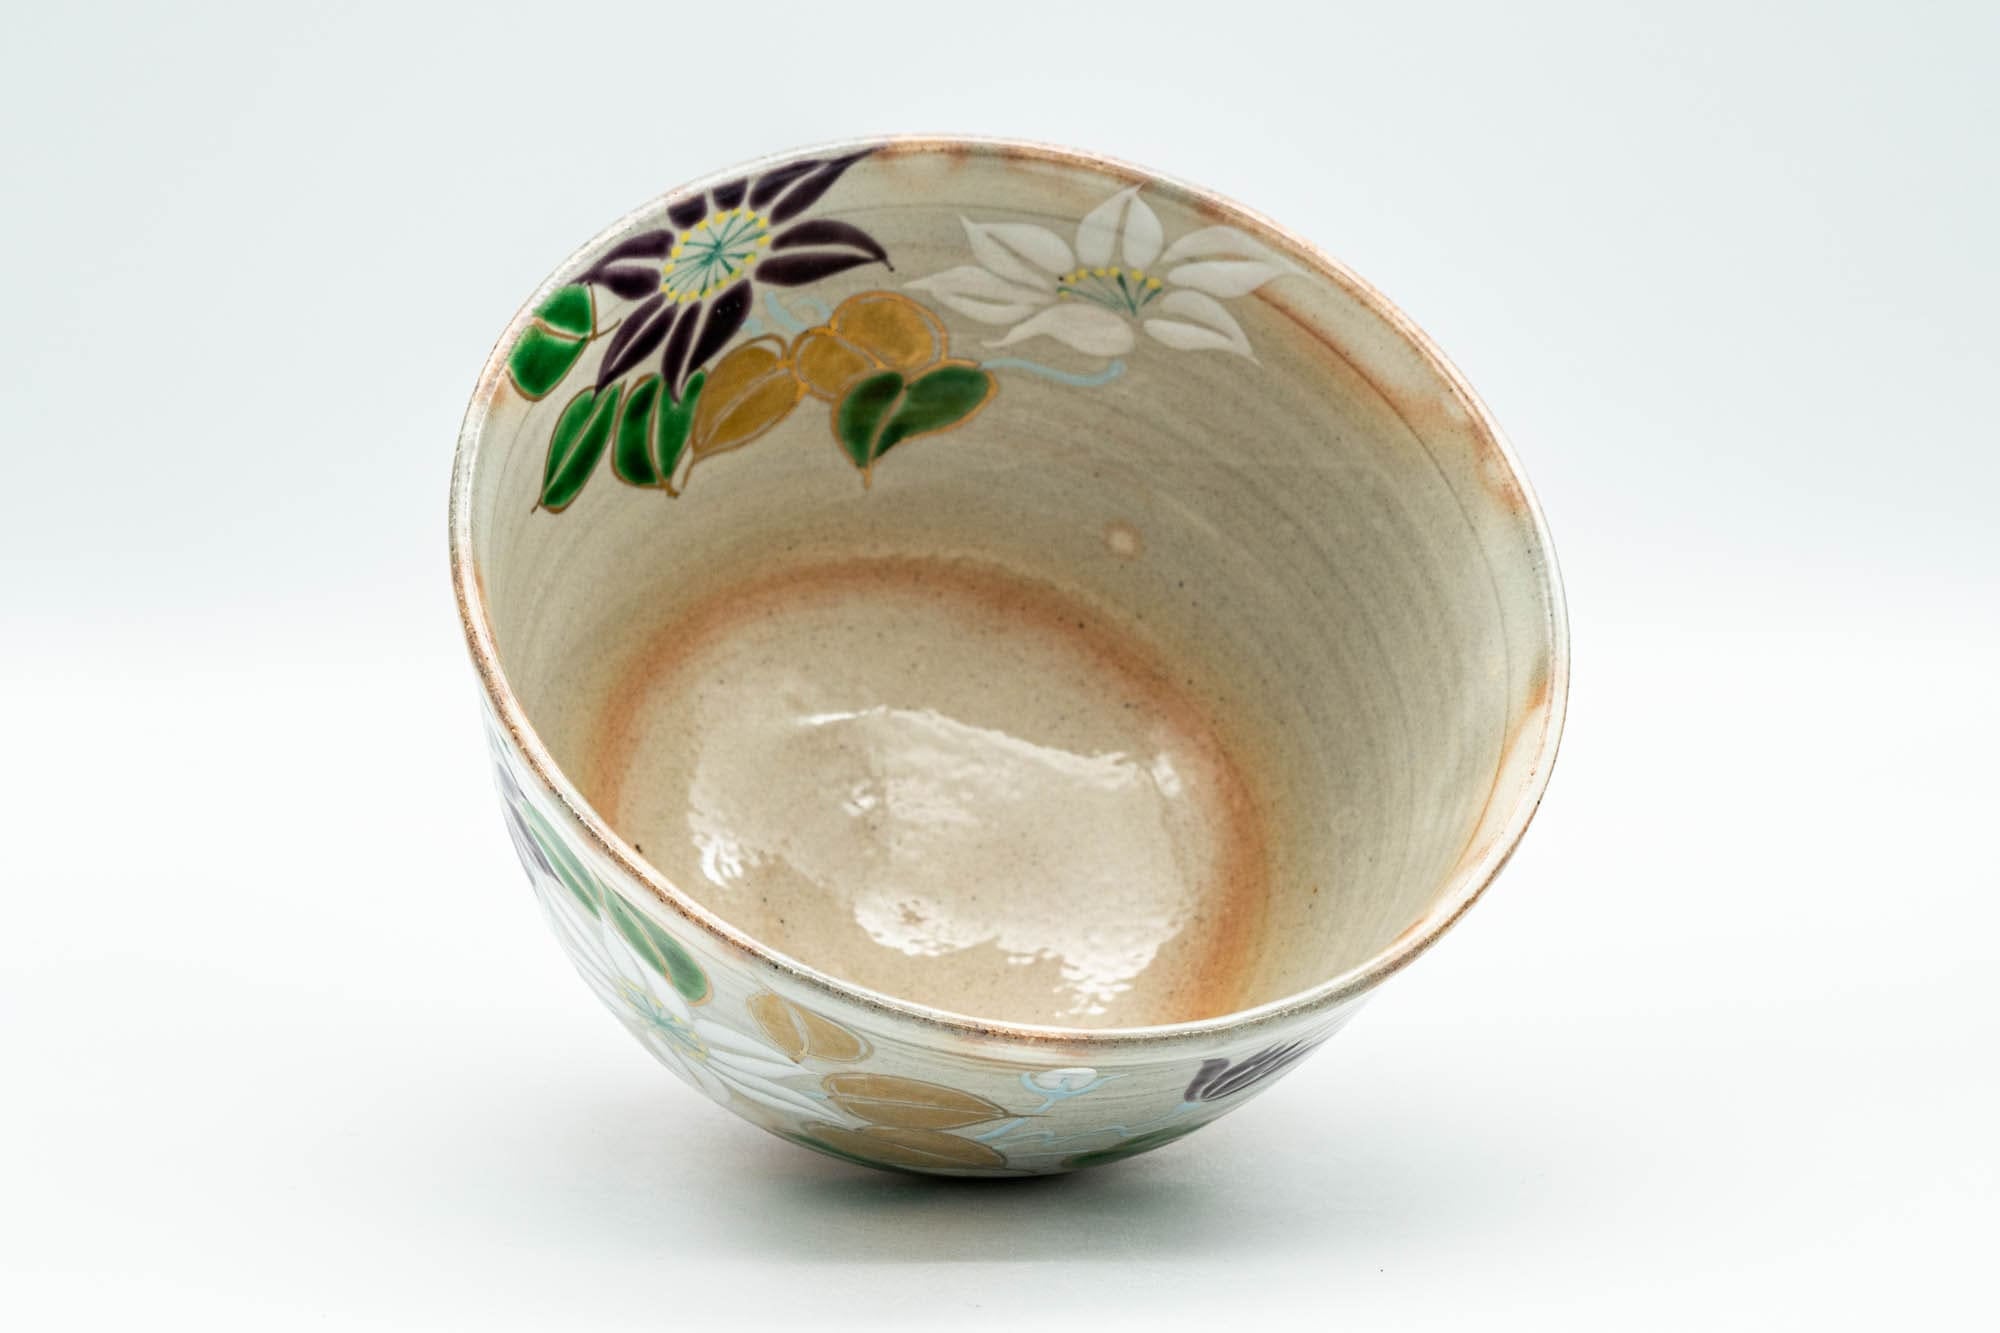 Japanese Matcha Bowl Set - Floral Hatazori-gata Kyo-yaki Chawan with Bamboo Chasen Whisk and Chashaku Scoop - 350ml